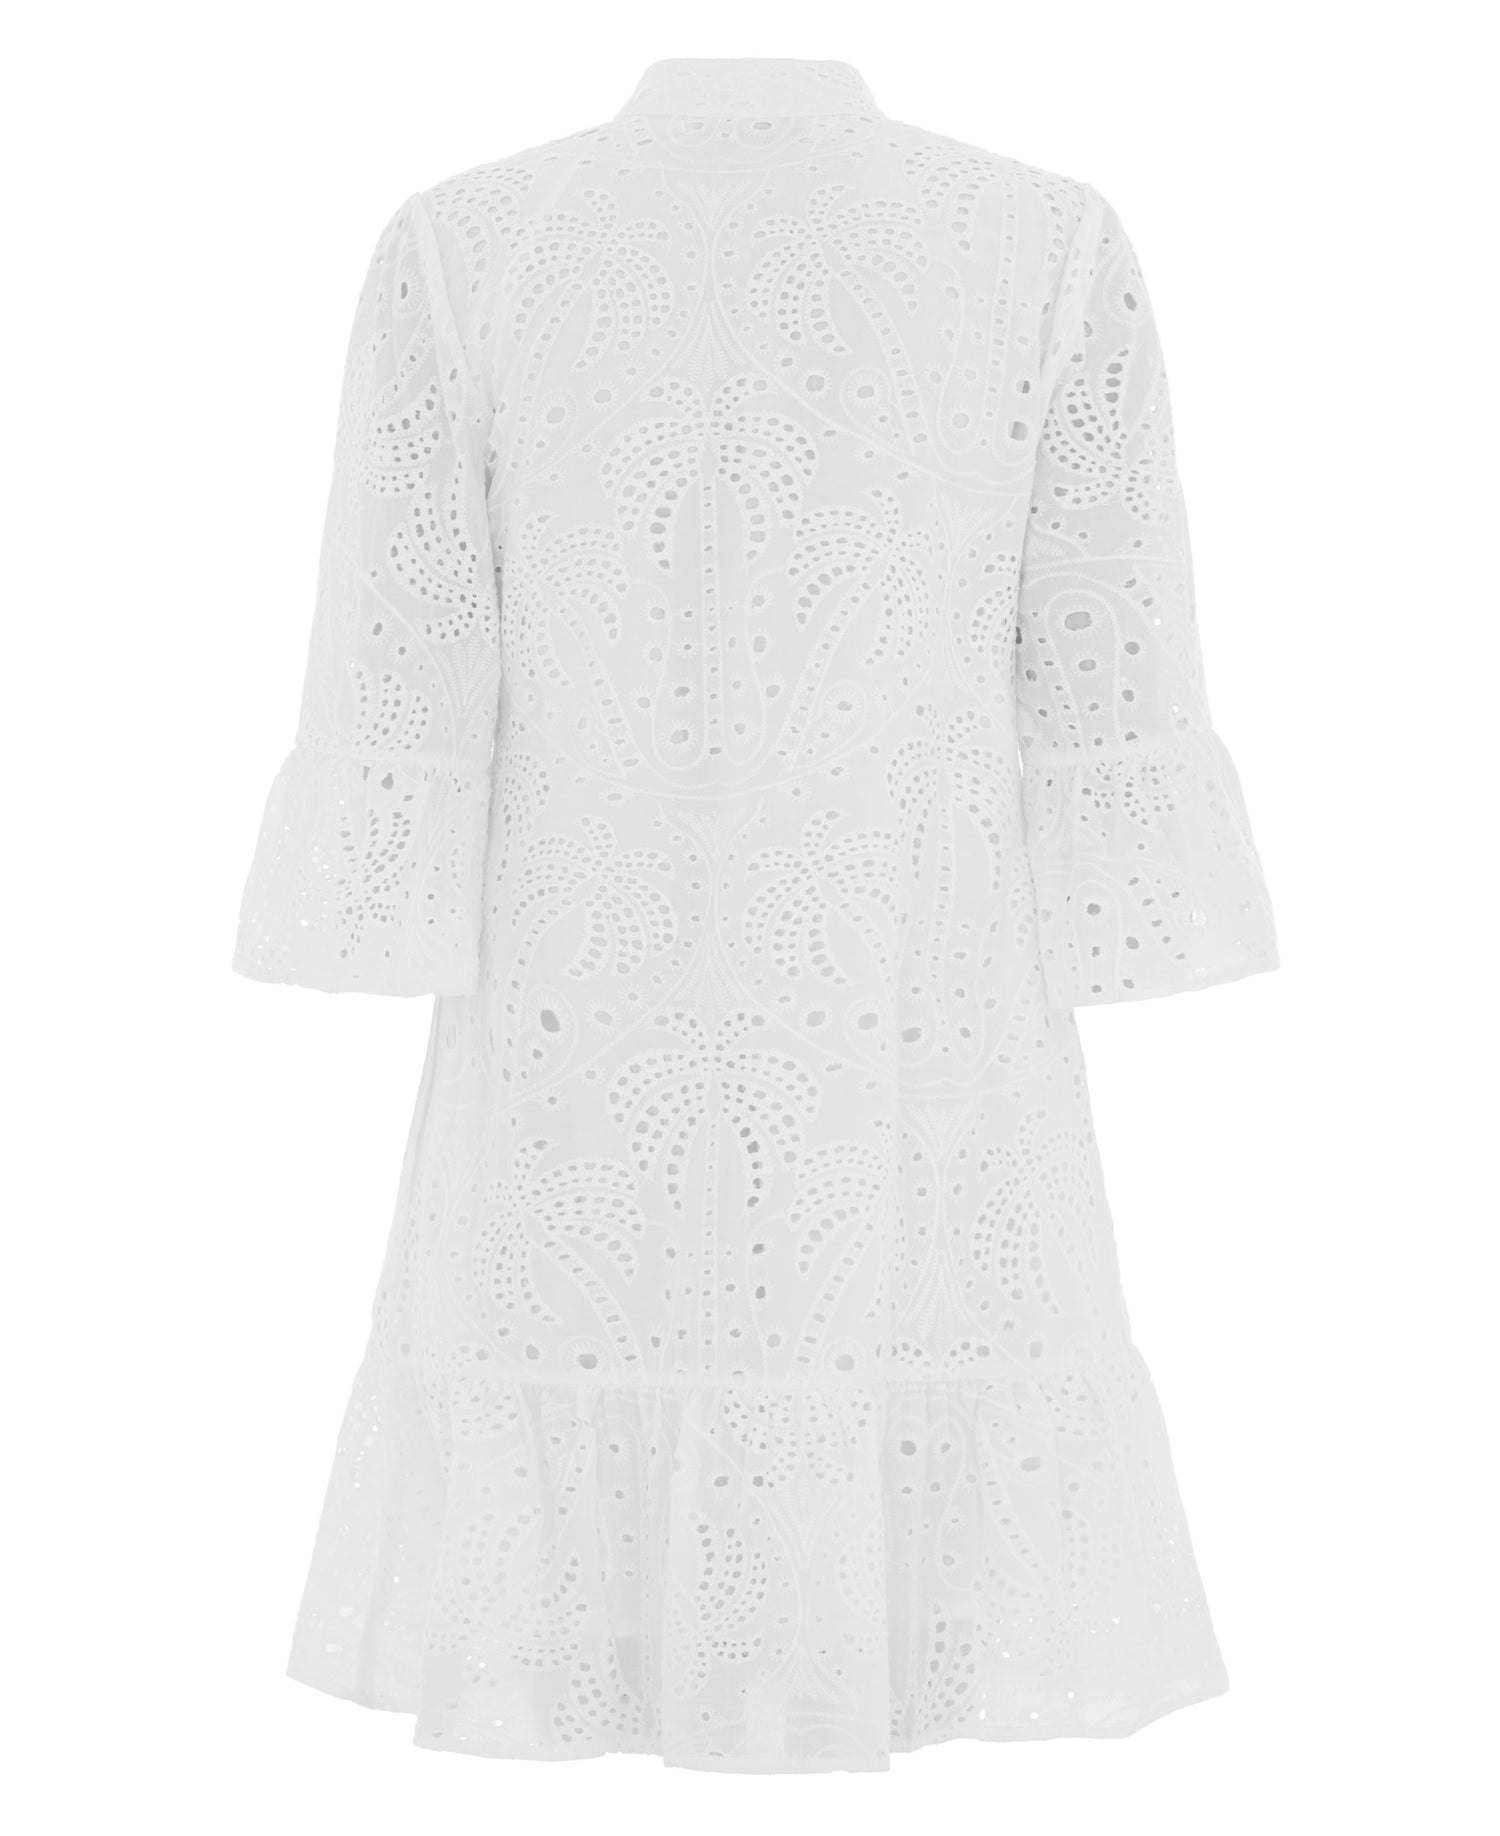 St Tropez Dress - White